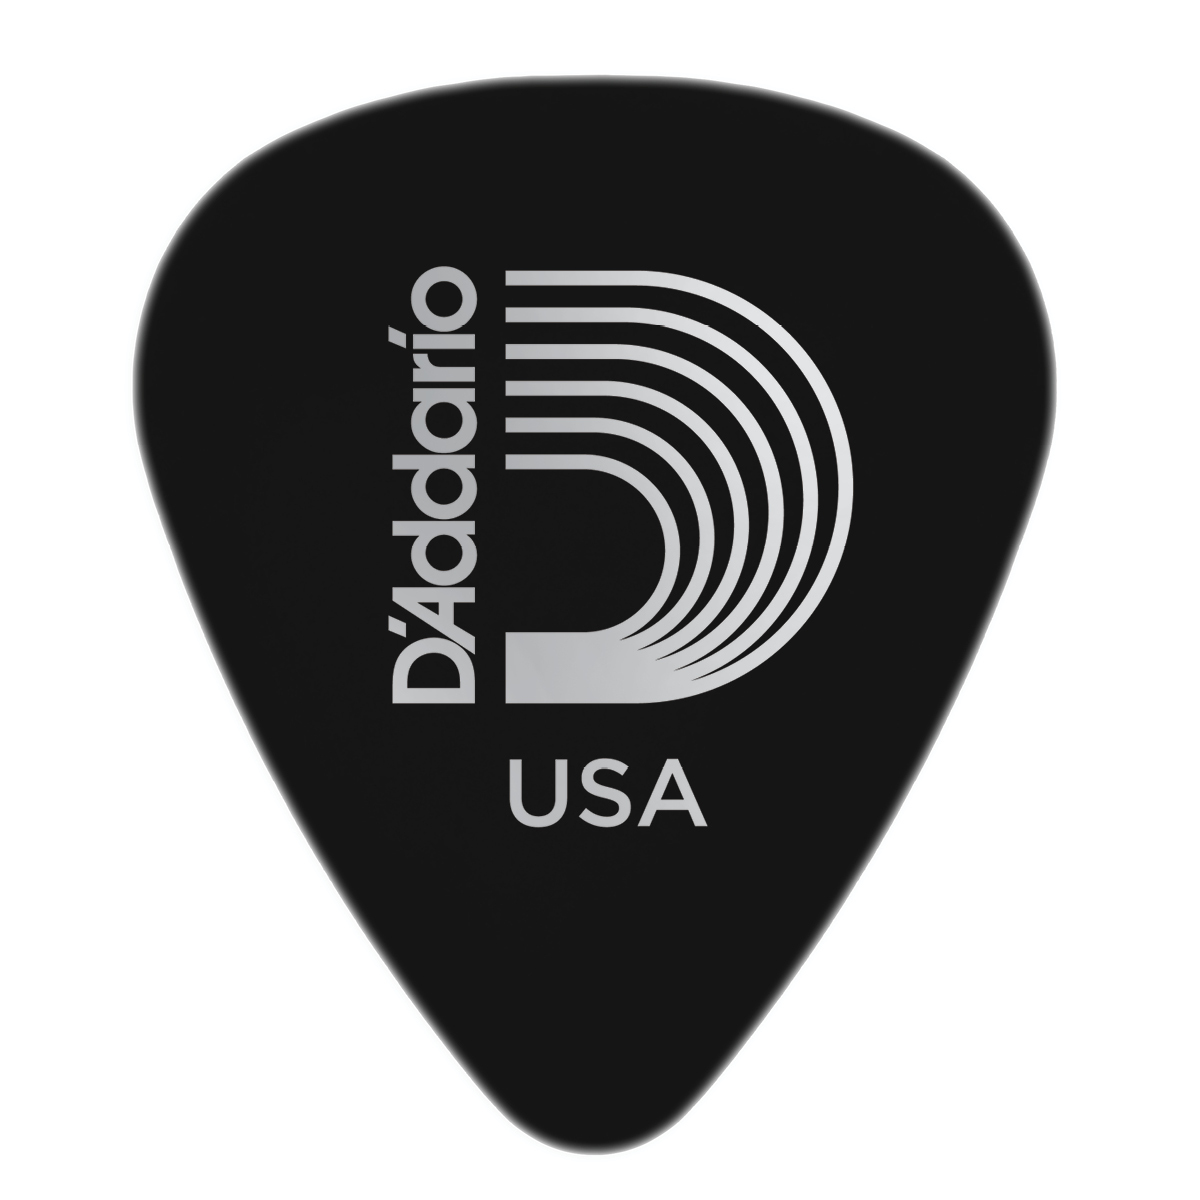 D'Addario Black Celluloid Guitar Pick, Medium